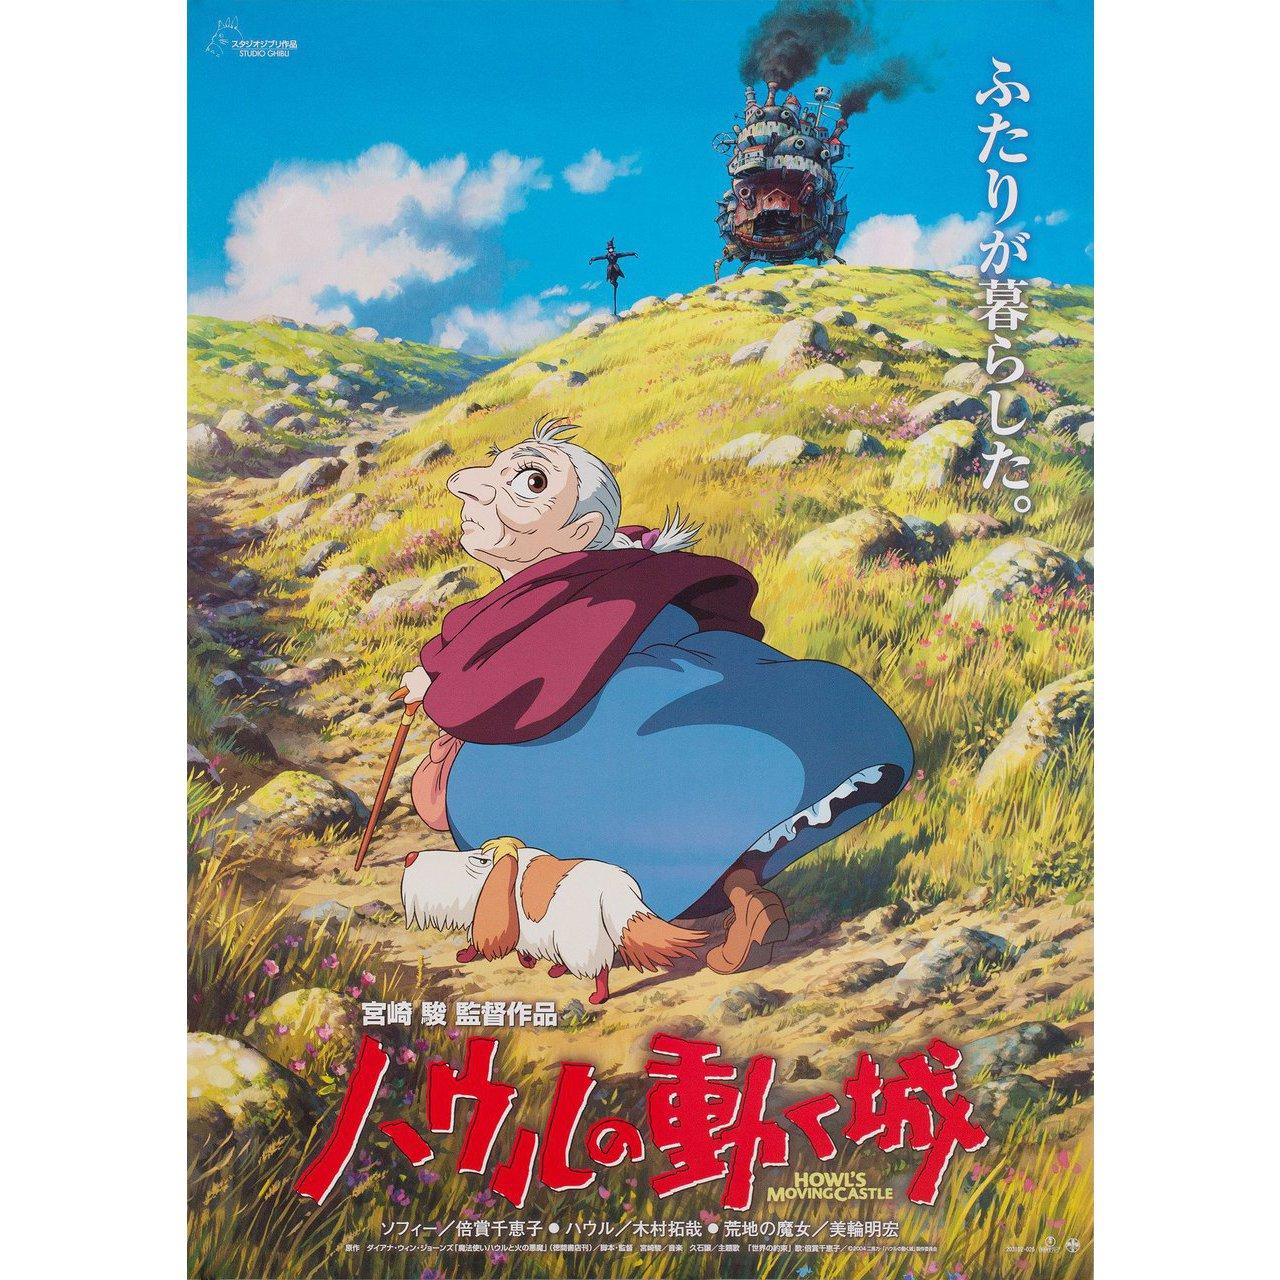 Original 2004 Japanese B2 poster for the film Howl's Moving Castle (Hauru no ugoku shiro) directed by Hayao Miyazaki with Chieko Baisho / Takuya Kimura / Akihiro Miwa / Tatsuya Gashuin. Very Good-Fine condition, rolled. Please note: the size is